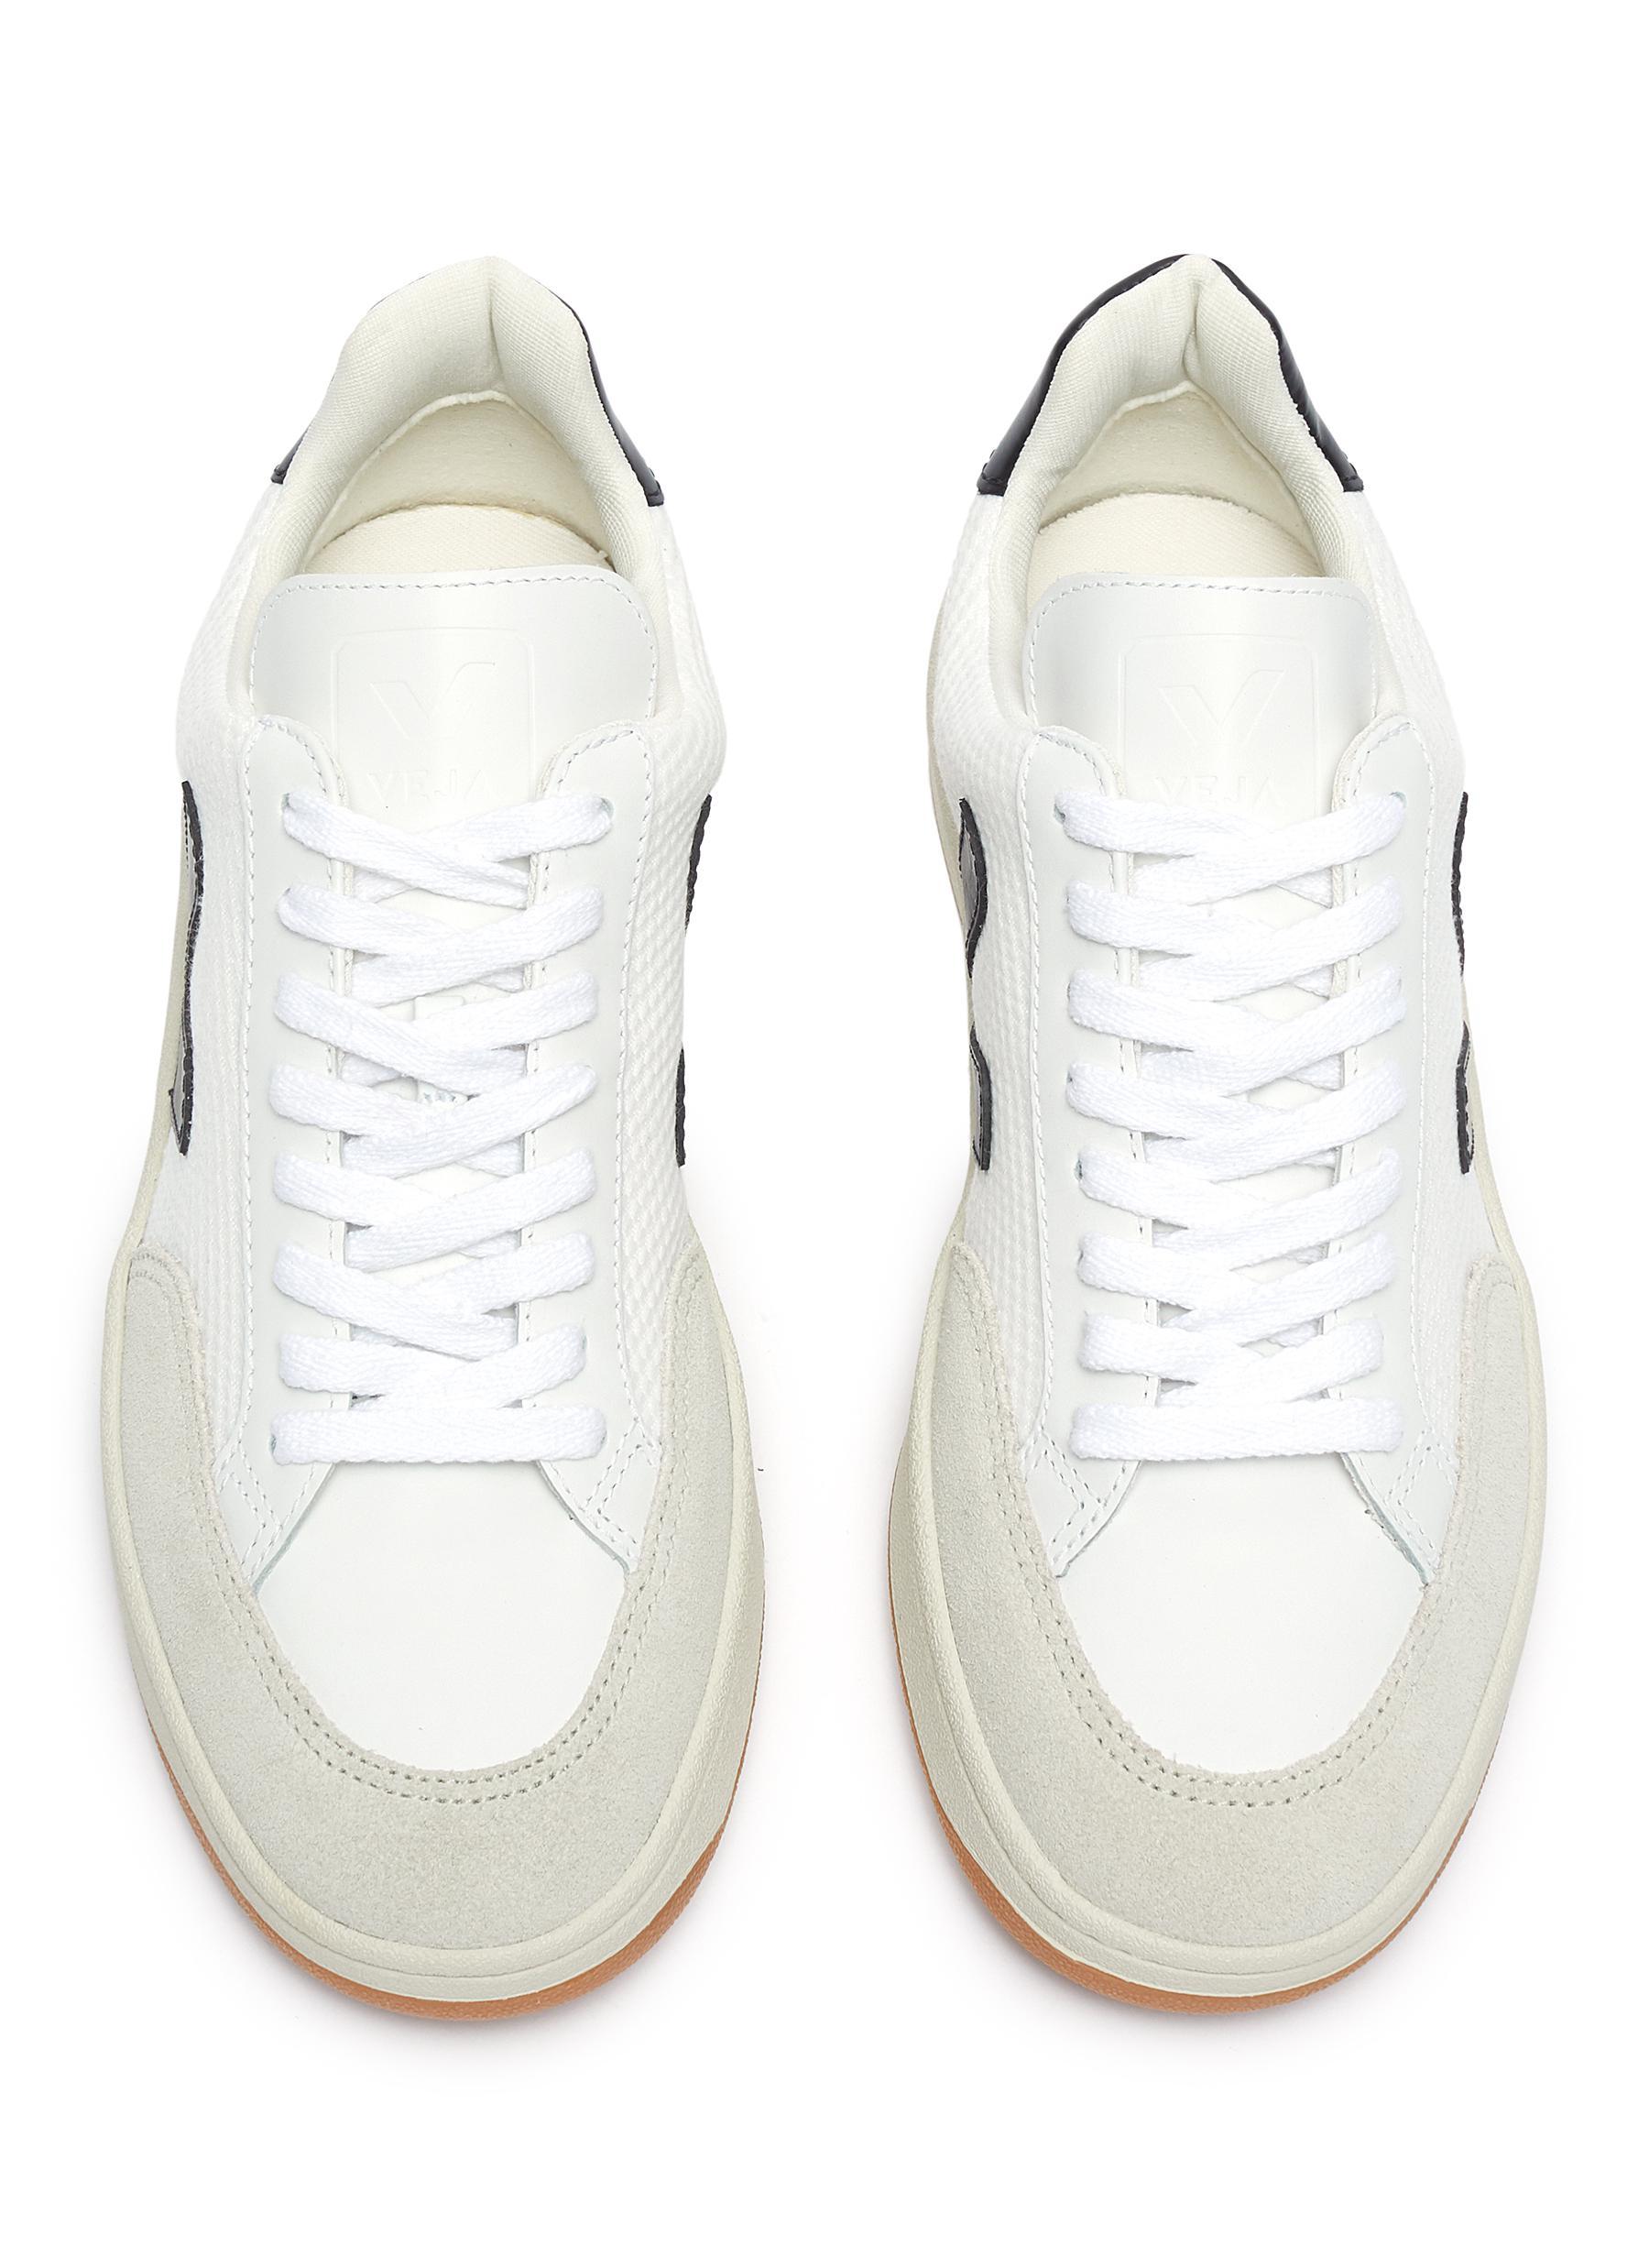 Veja V-12 Sneaker in White / Black (White) | Lyst